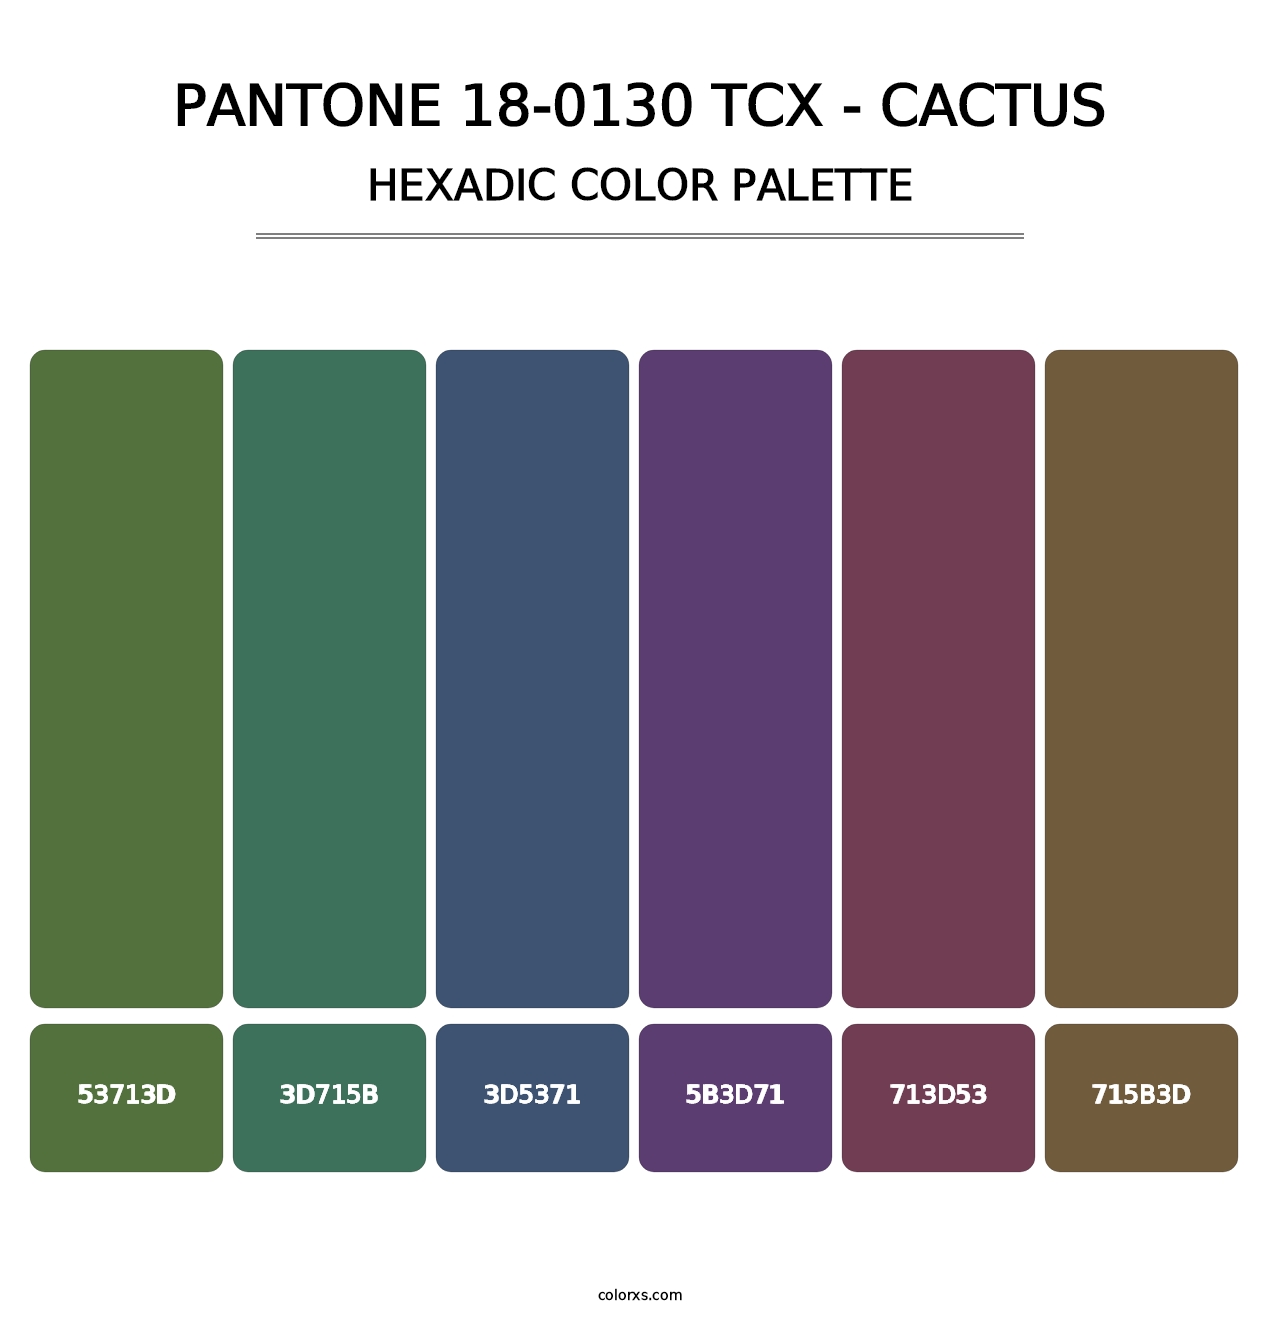 PANTONE 18-0130 TCX - Cactus - Hexadic Color Palette